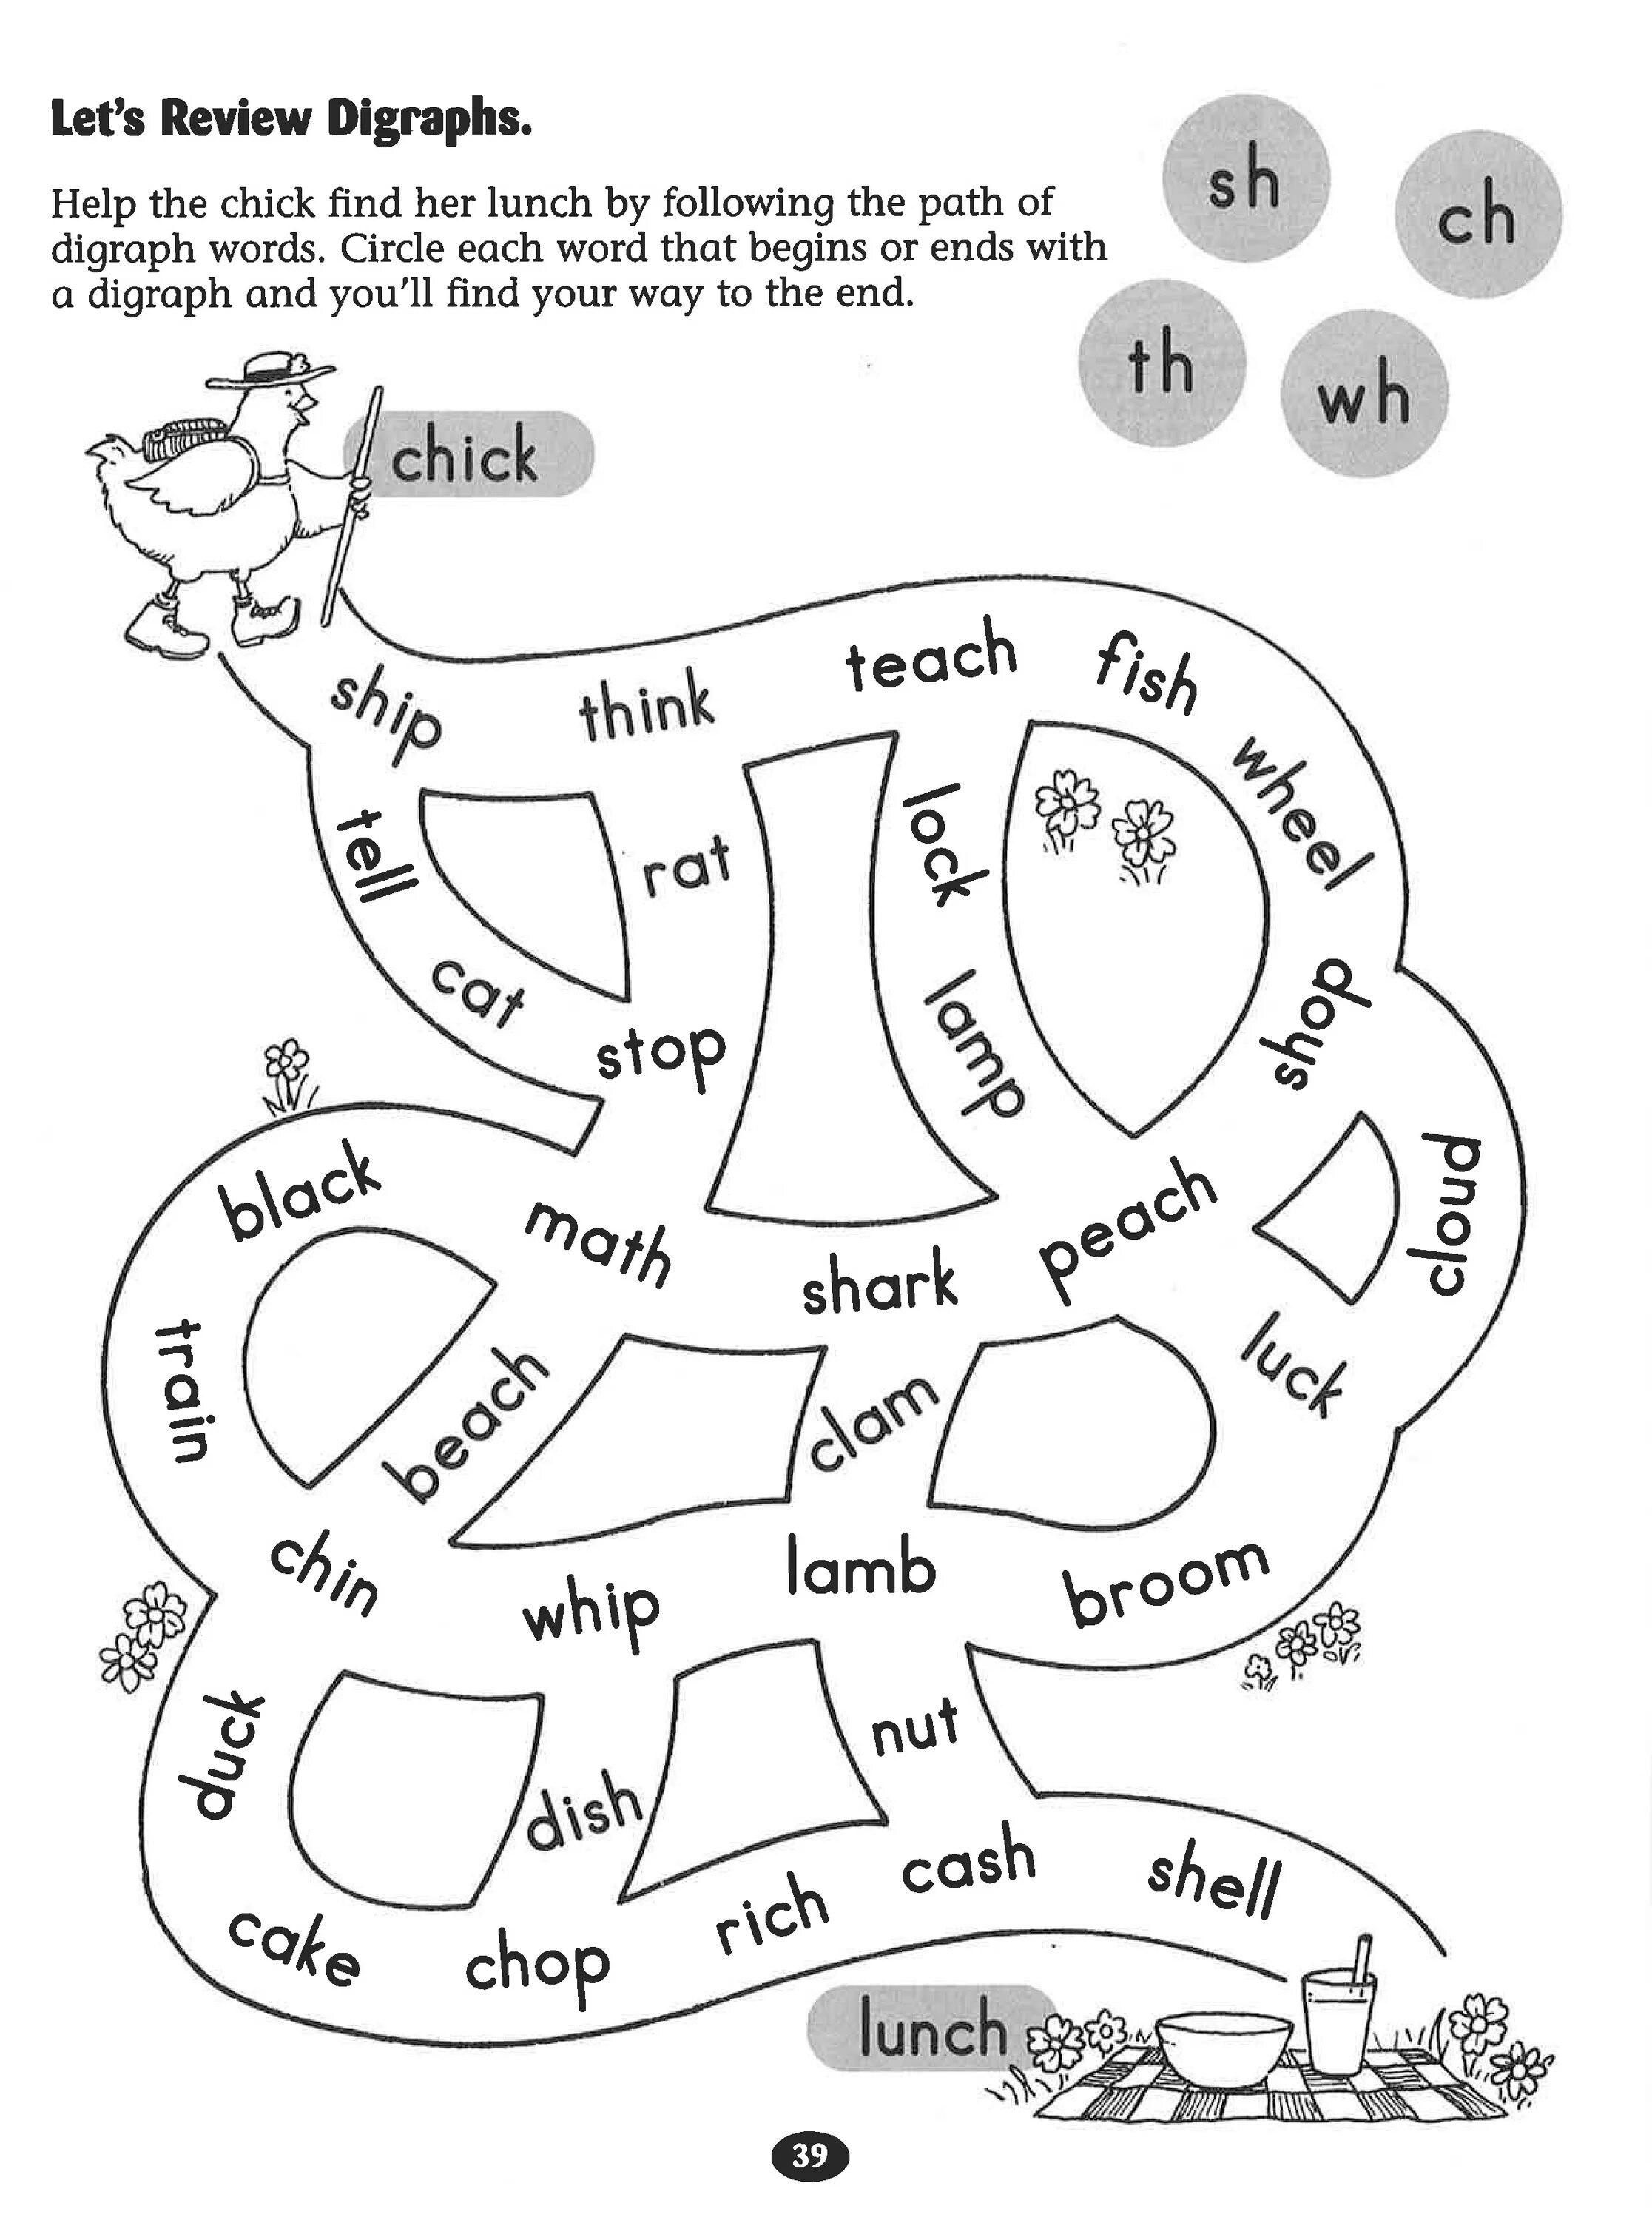 Lets play words. Sh Ch th PH чтение Worksheets. Английский задания на sh. Ch в английском языке задания. Чтение th в английском языке упражнения.